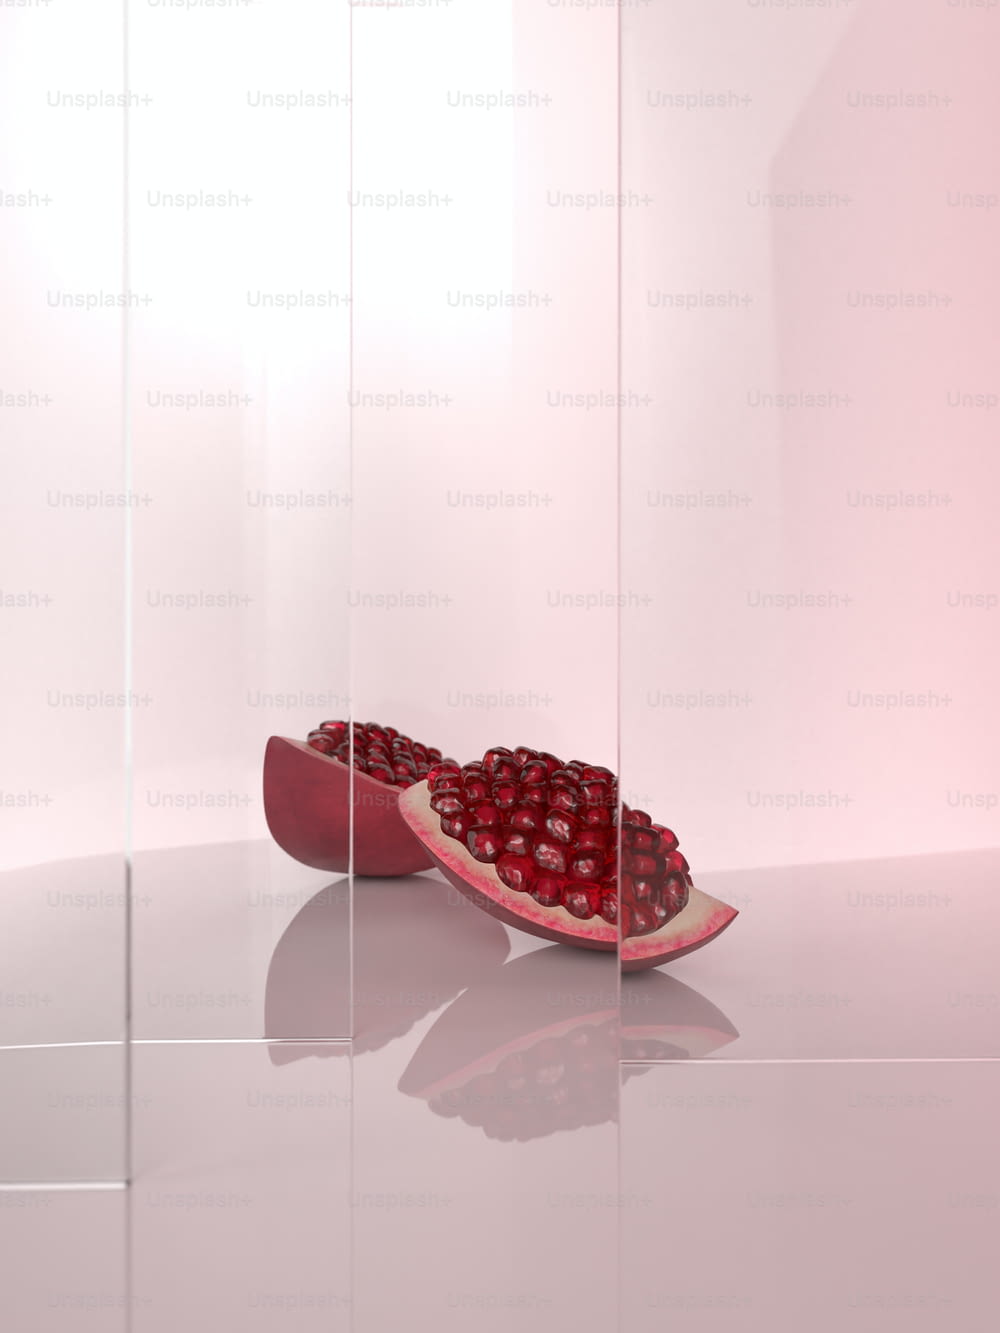 a pomegranate in a glass display case